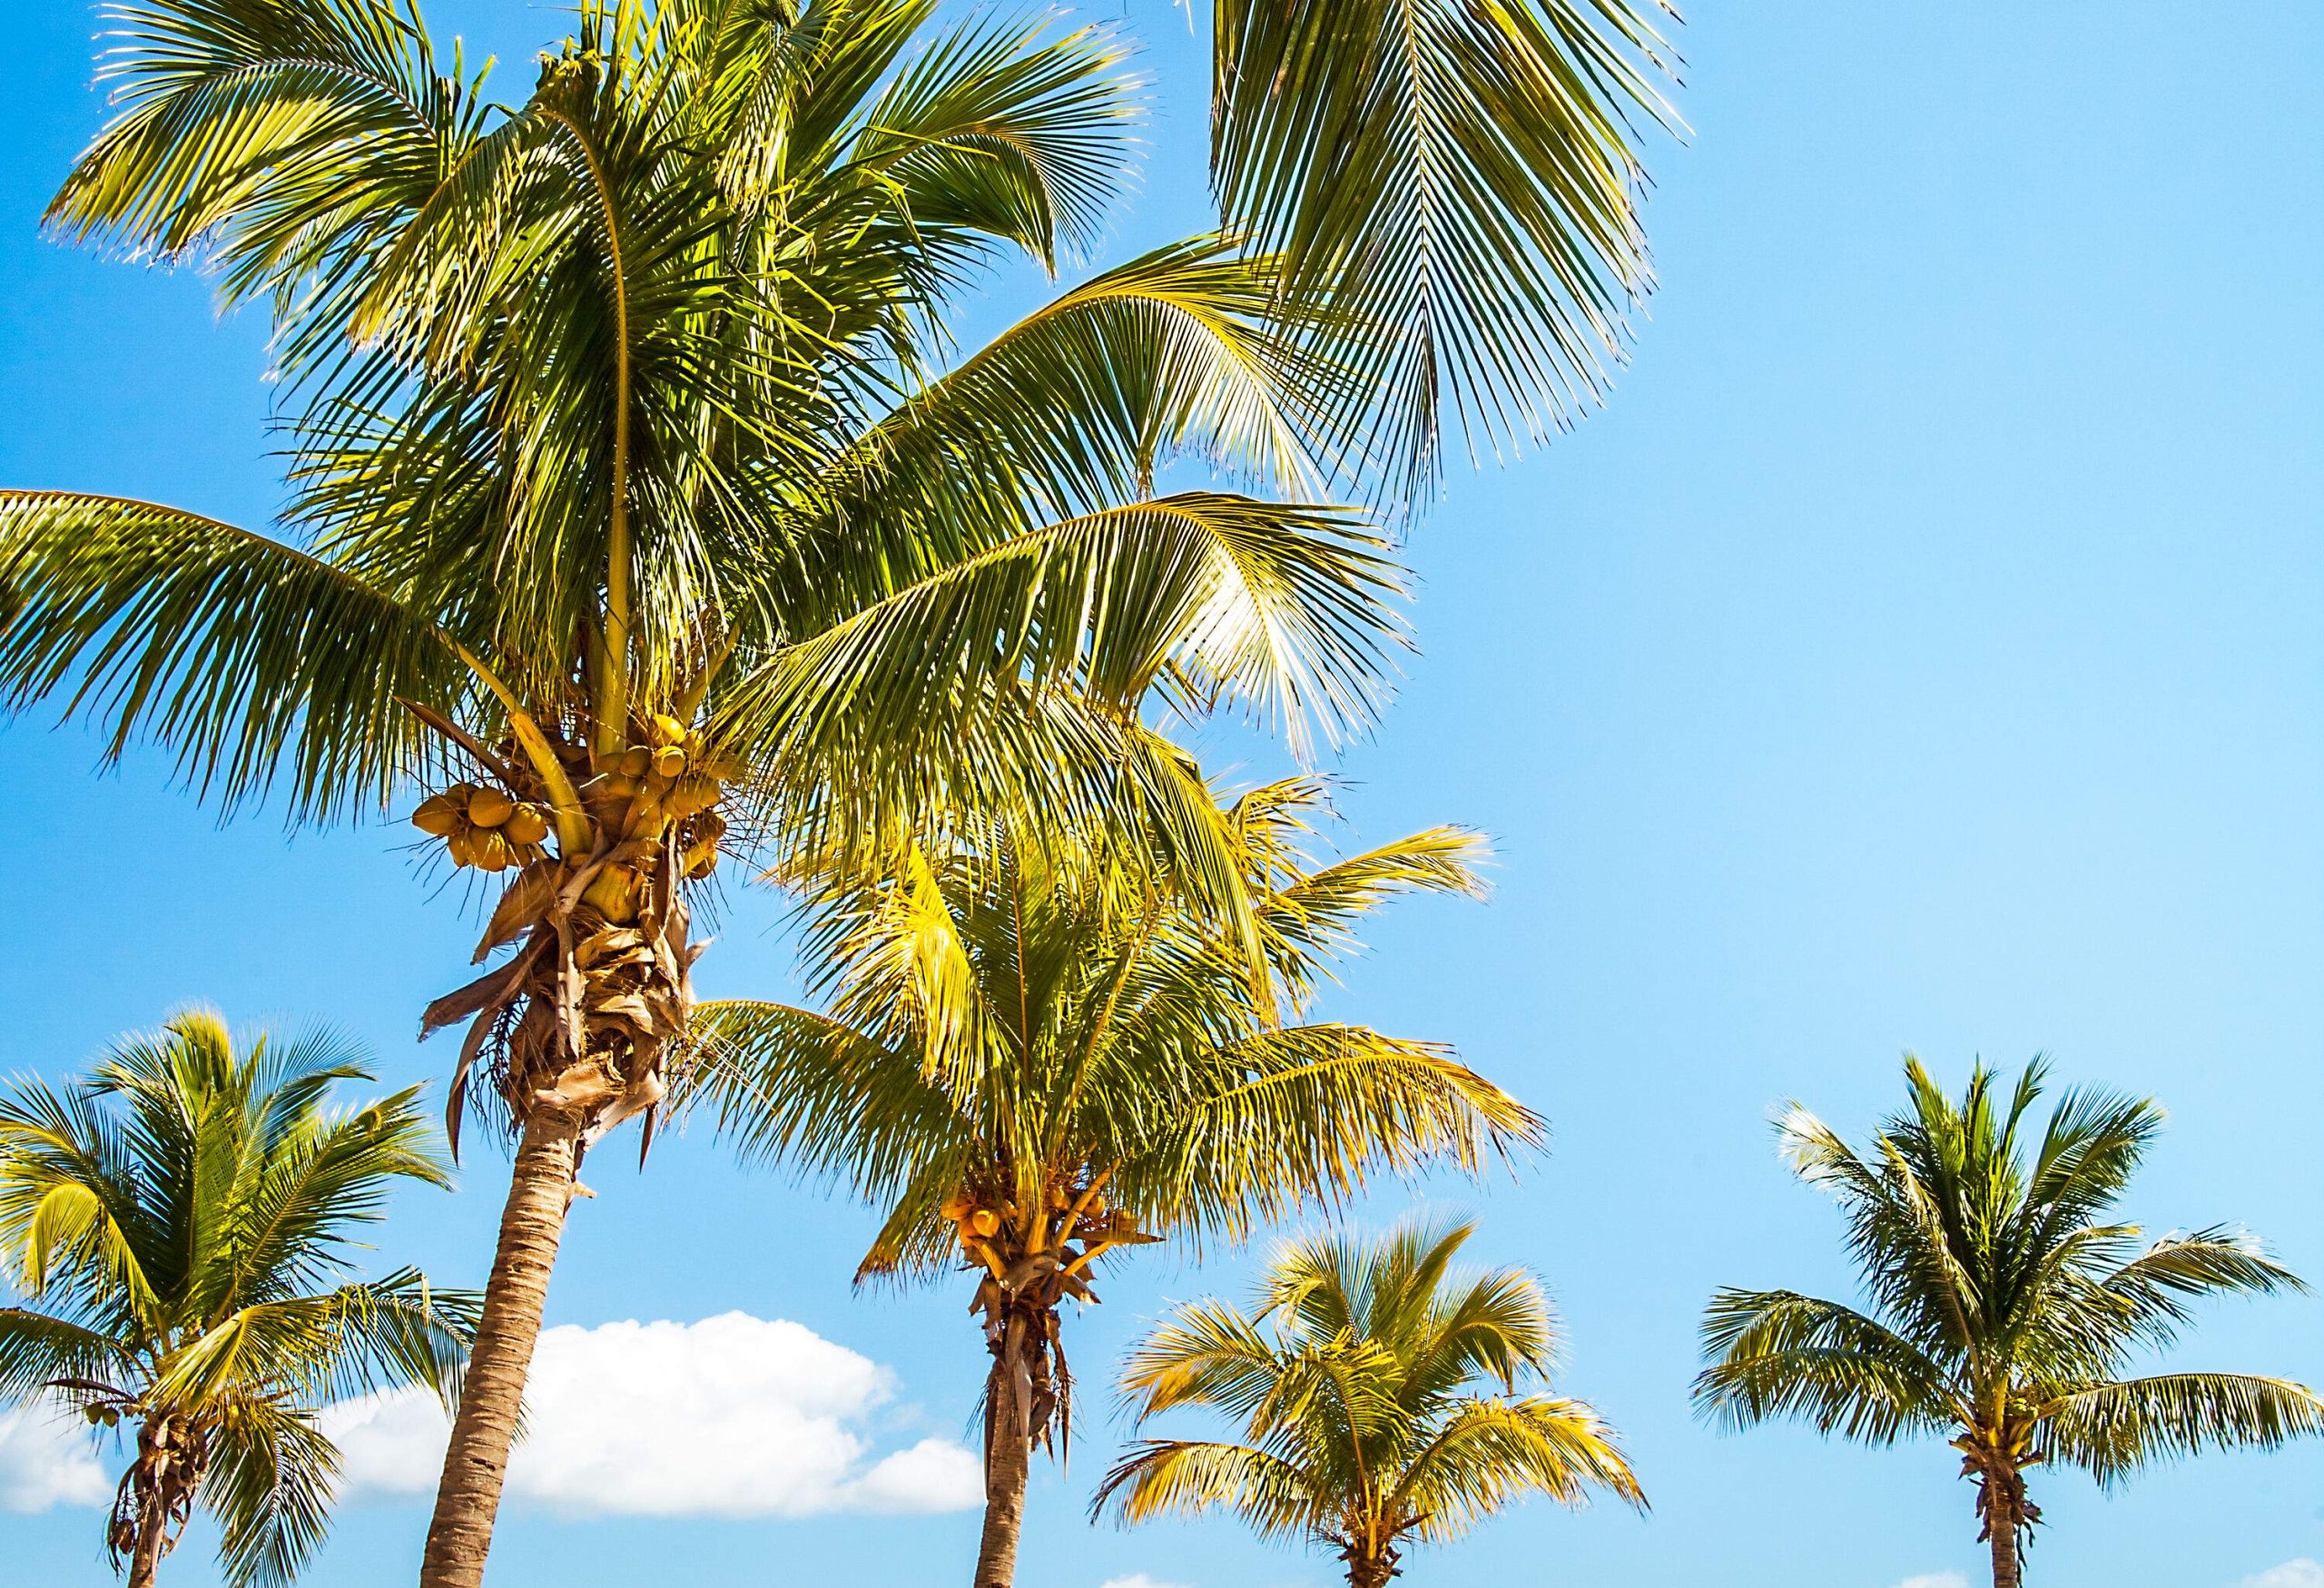 A calm beach with a grove of palm trees.